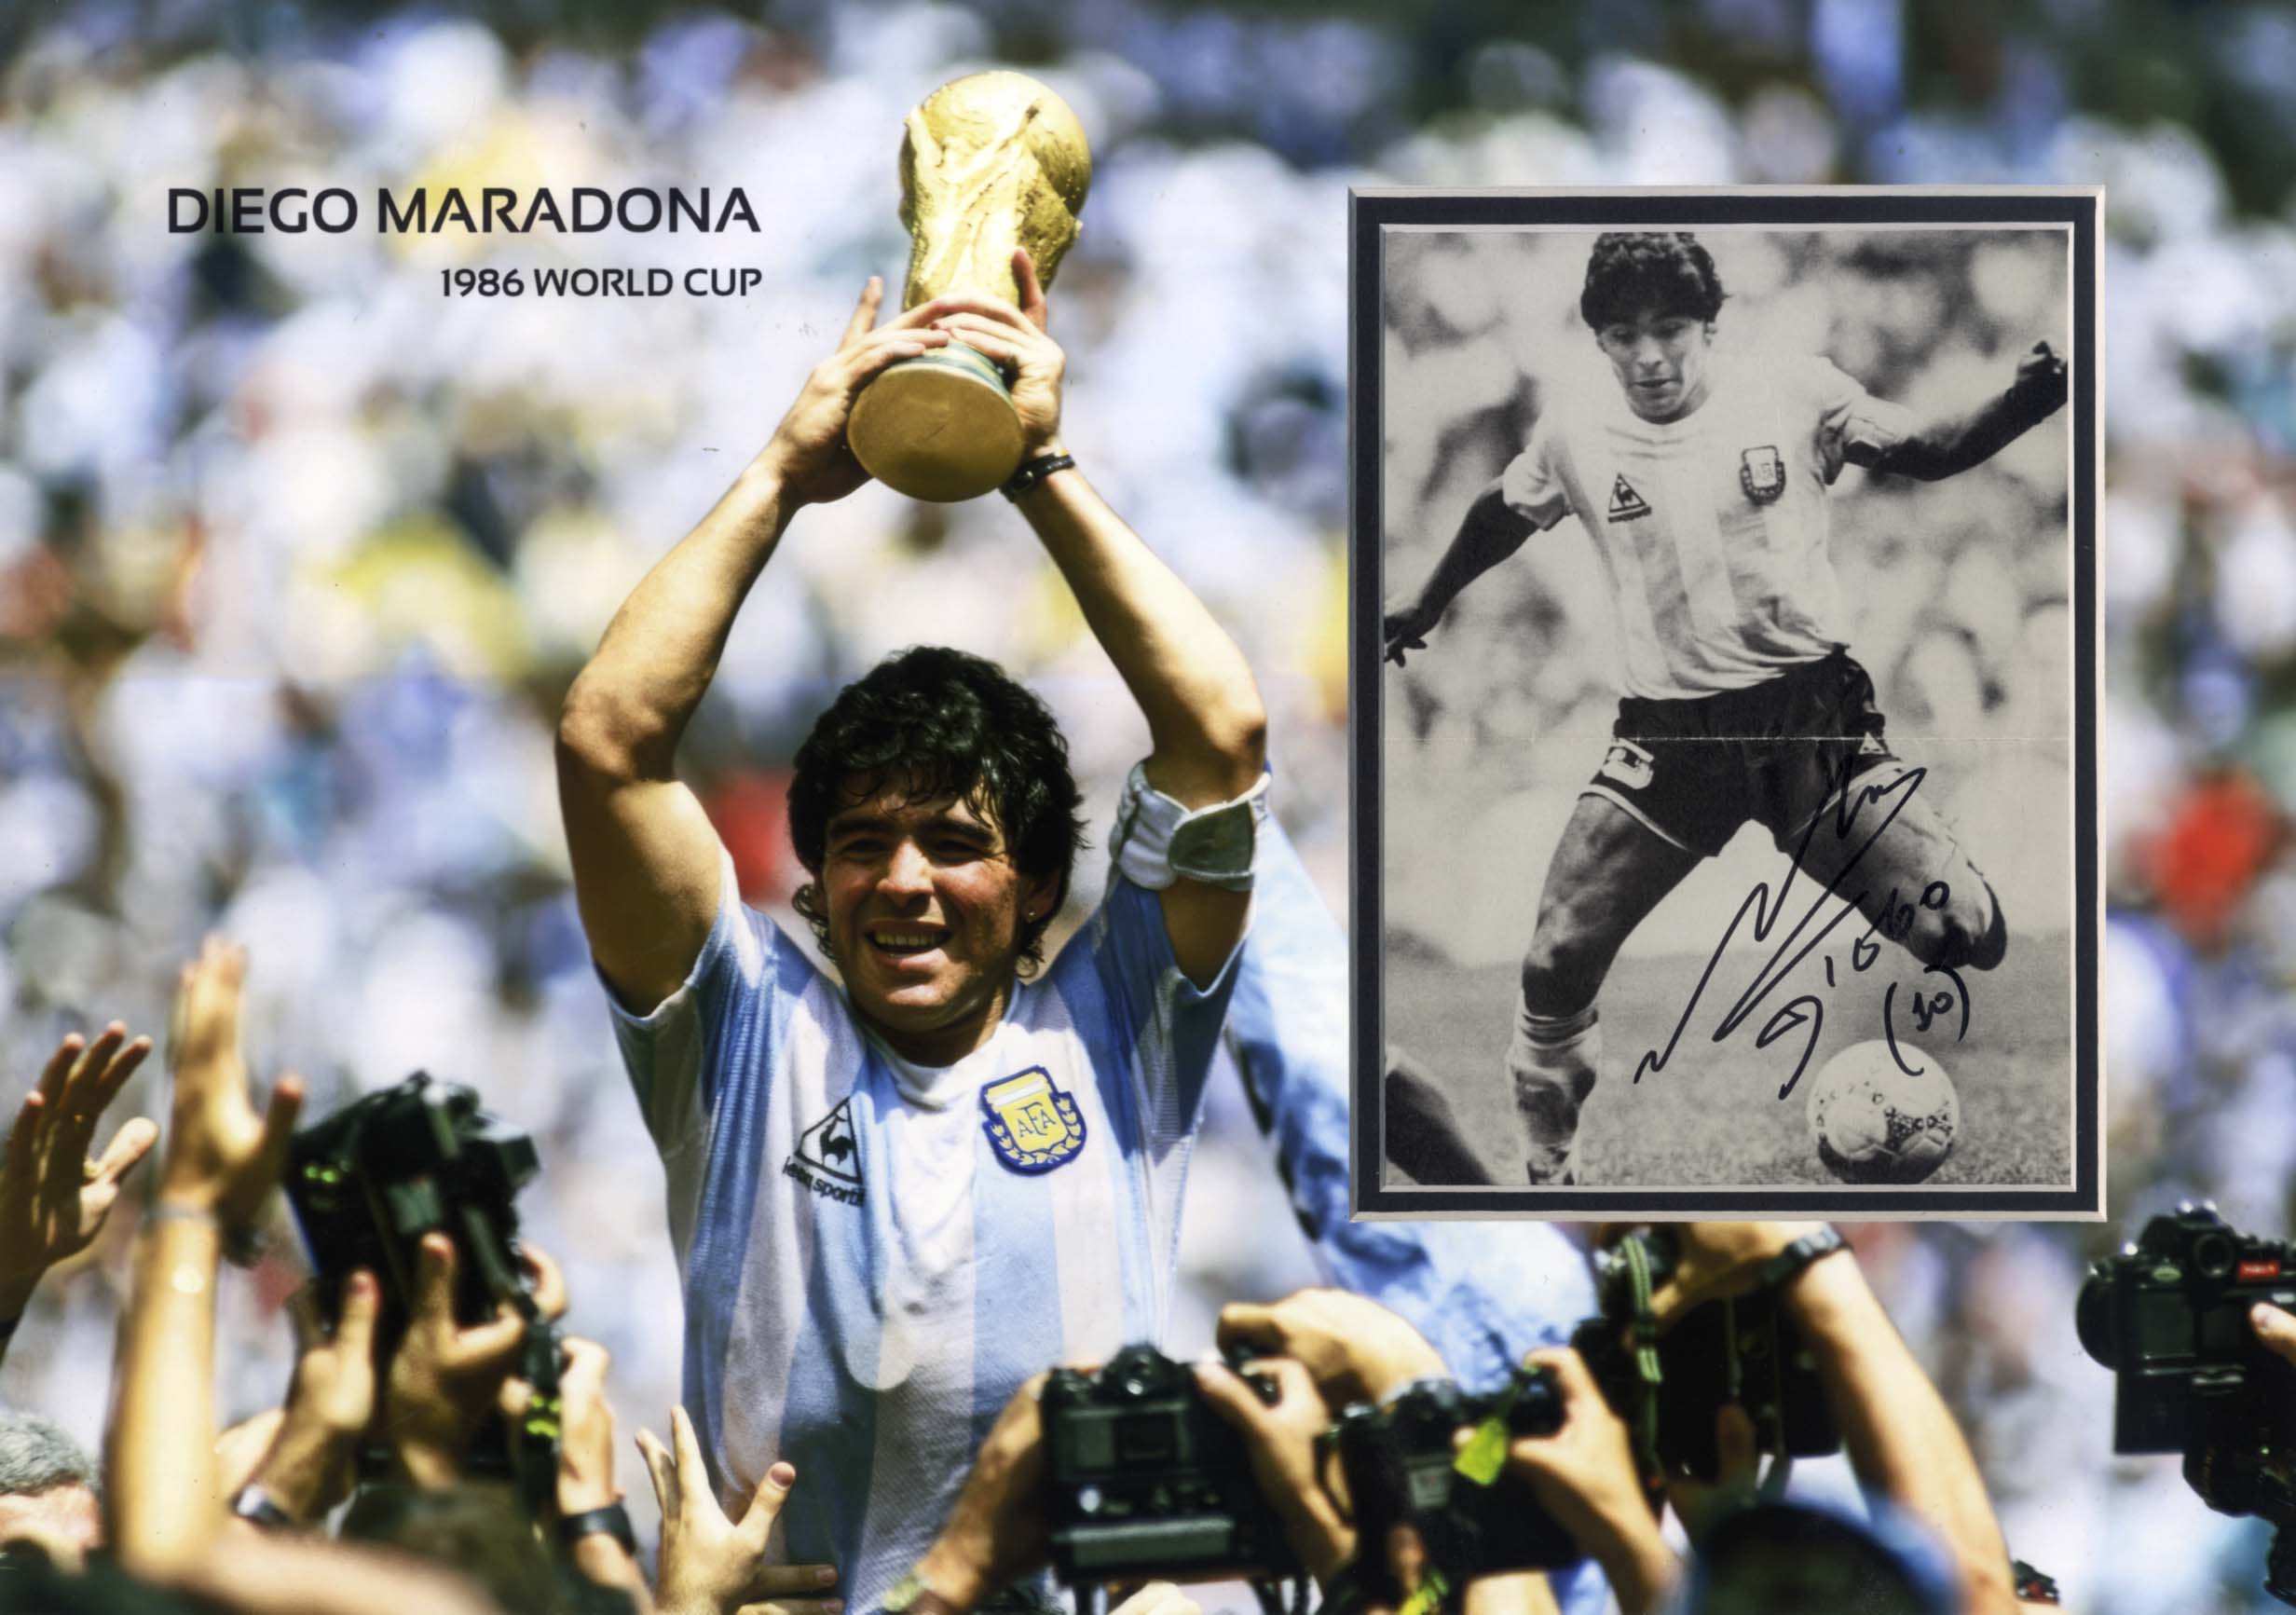 Diego Maradona Autograph Autogramm | ID 8495236120725